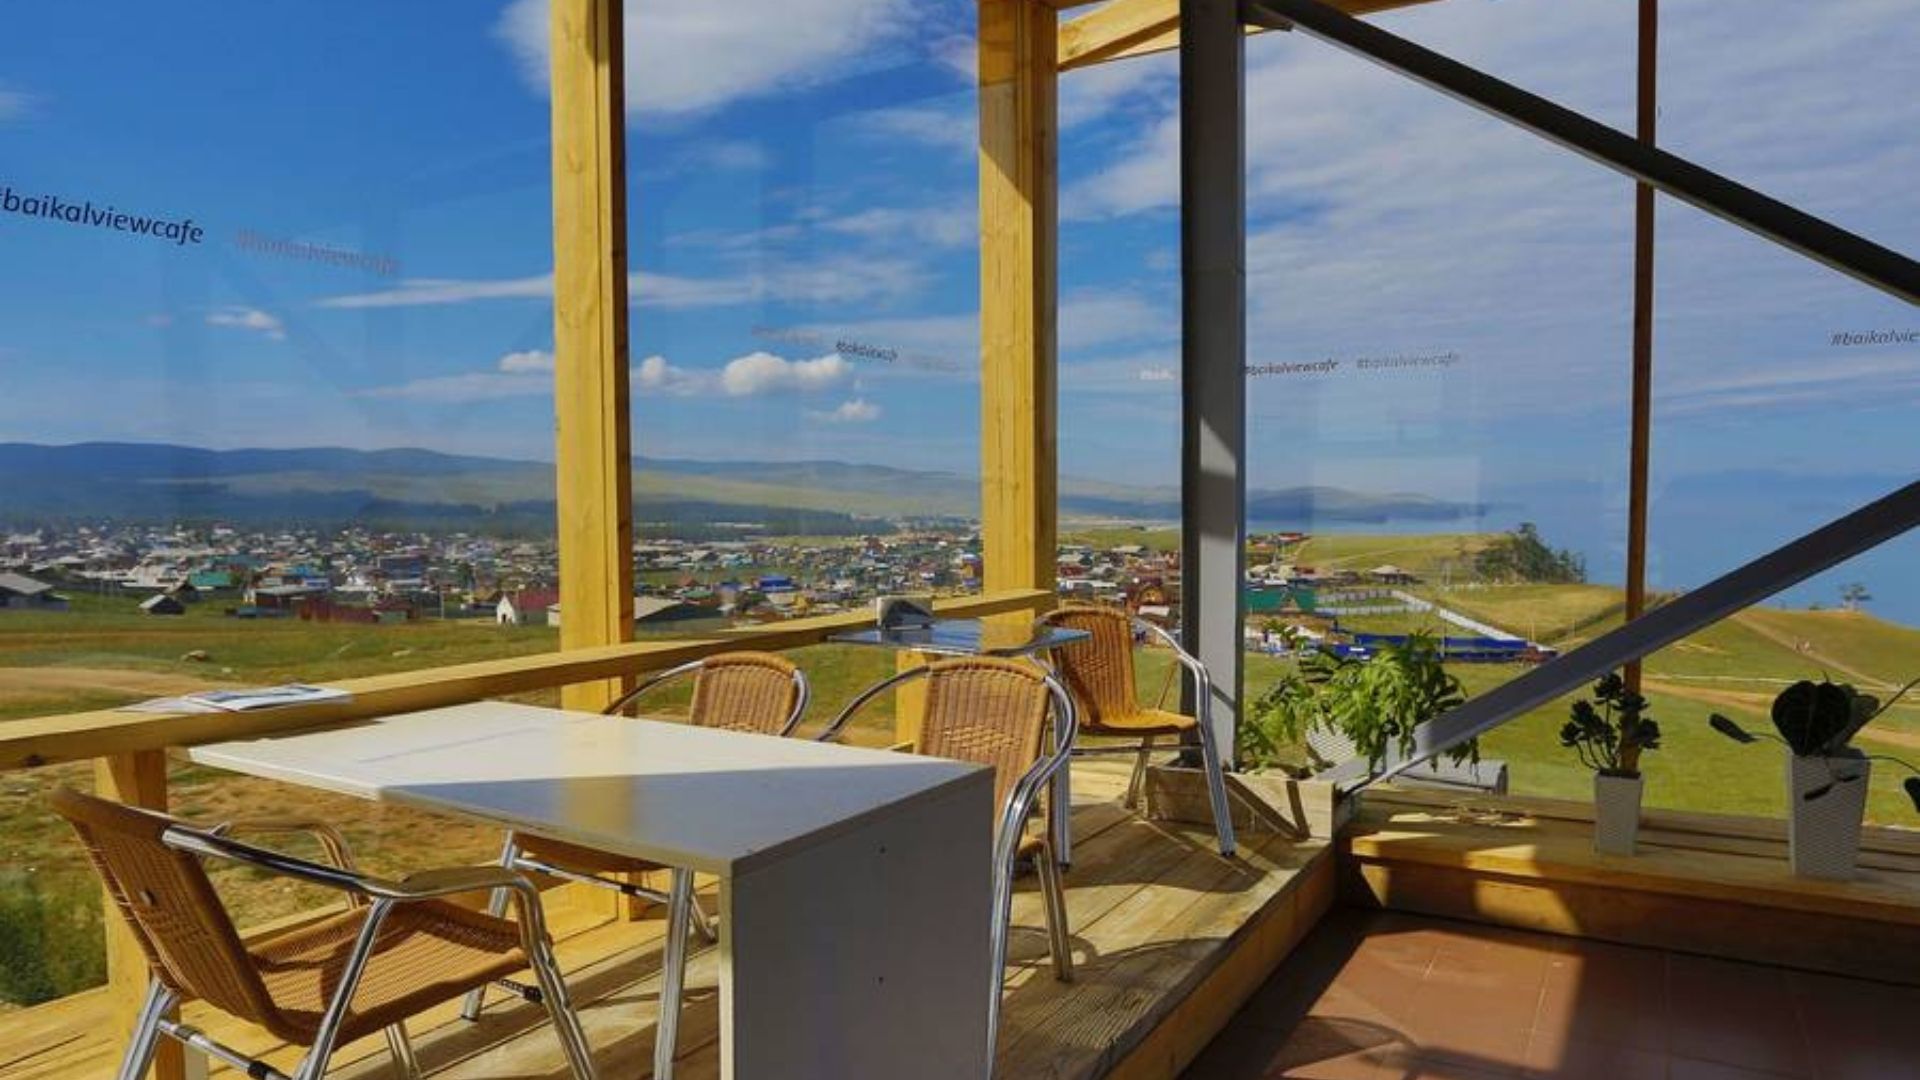 Baikal View Hotel